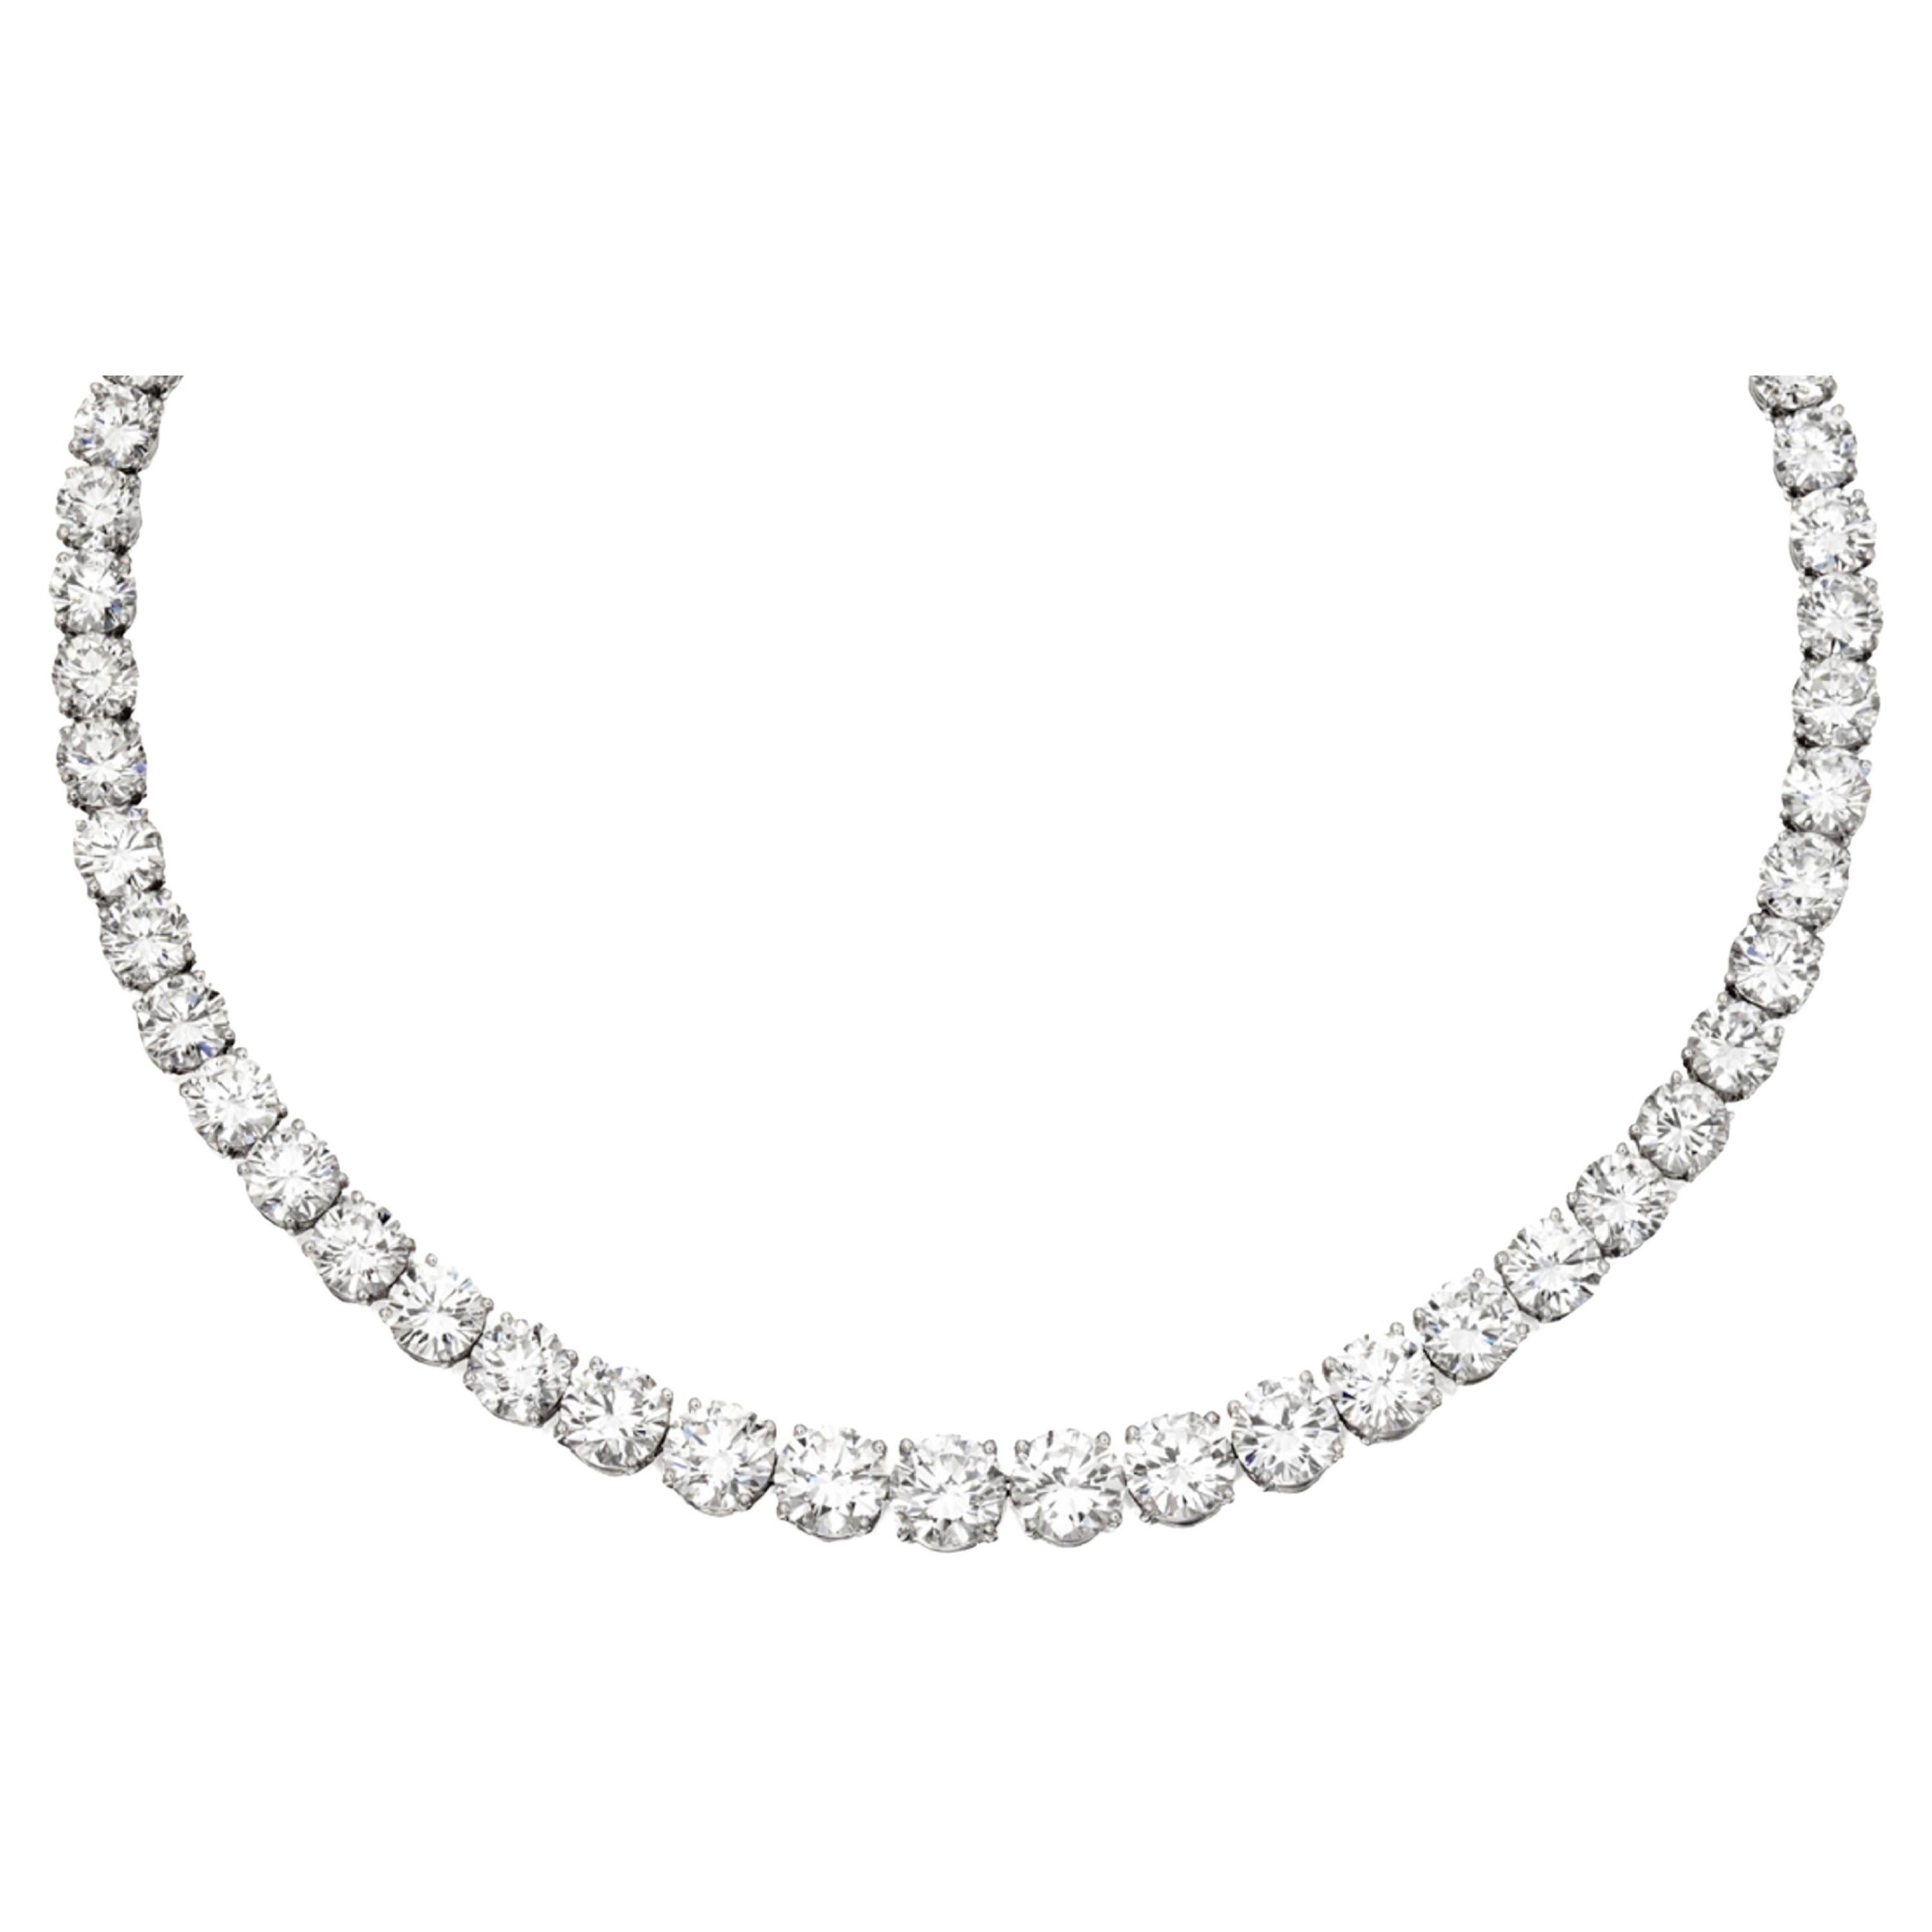  25 Carat Riviera Diamond Tennis Necklace 